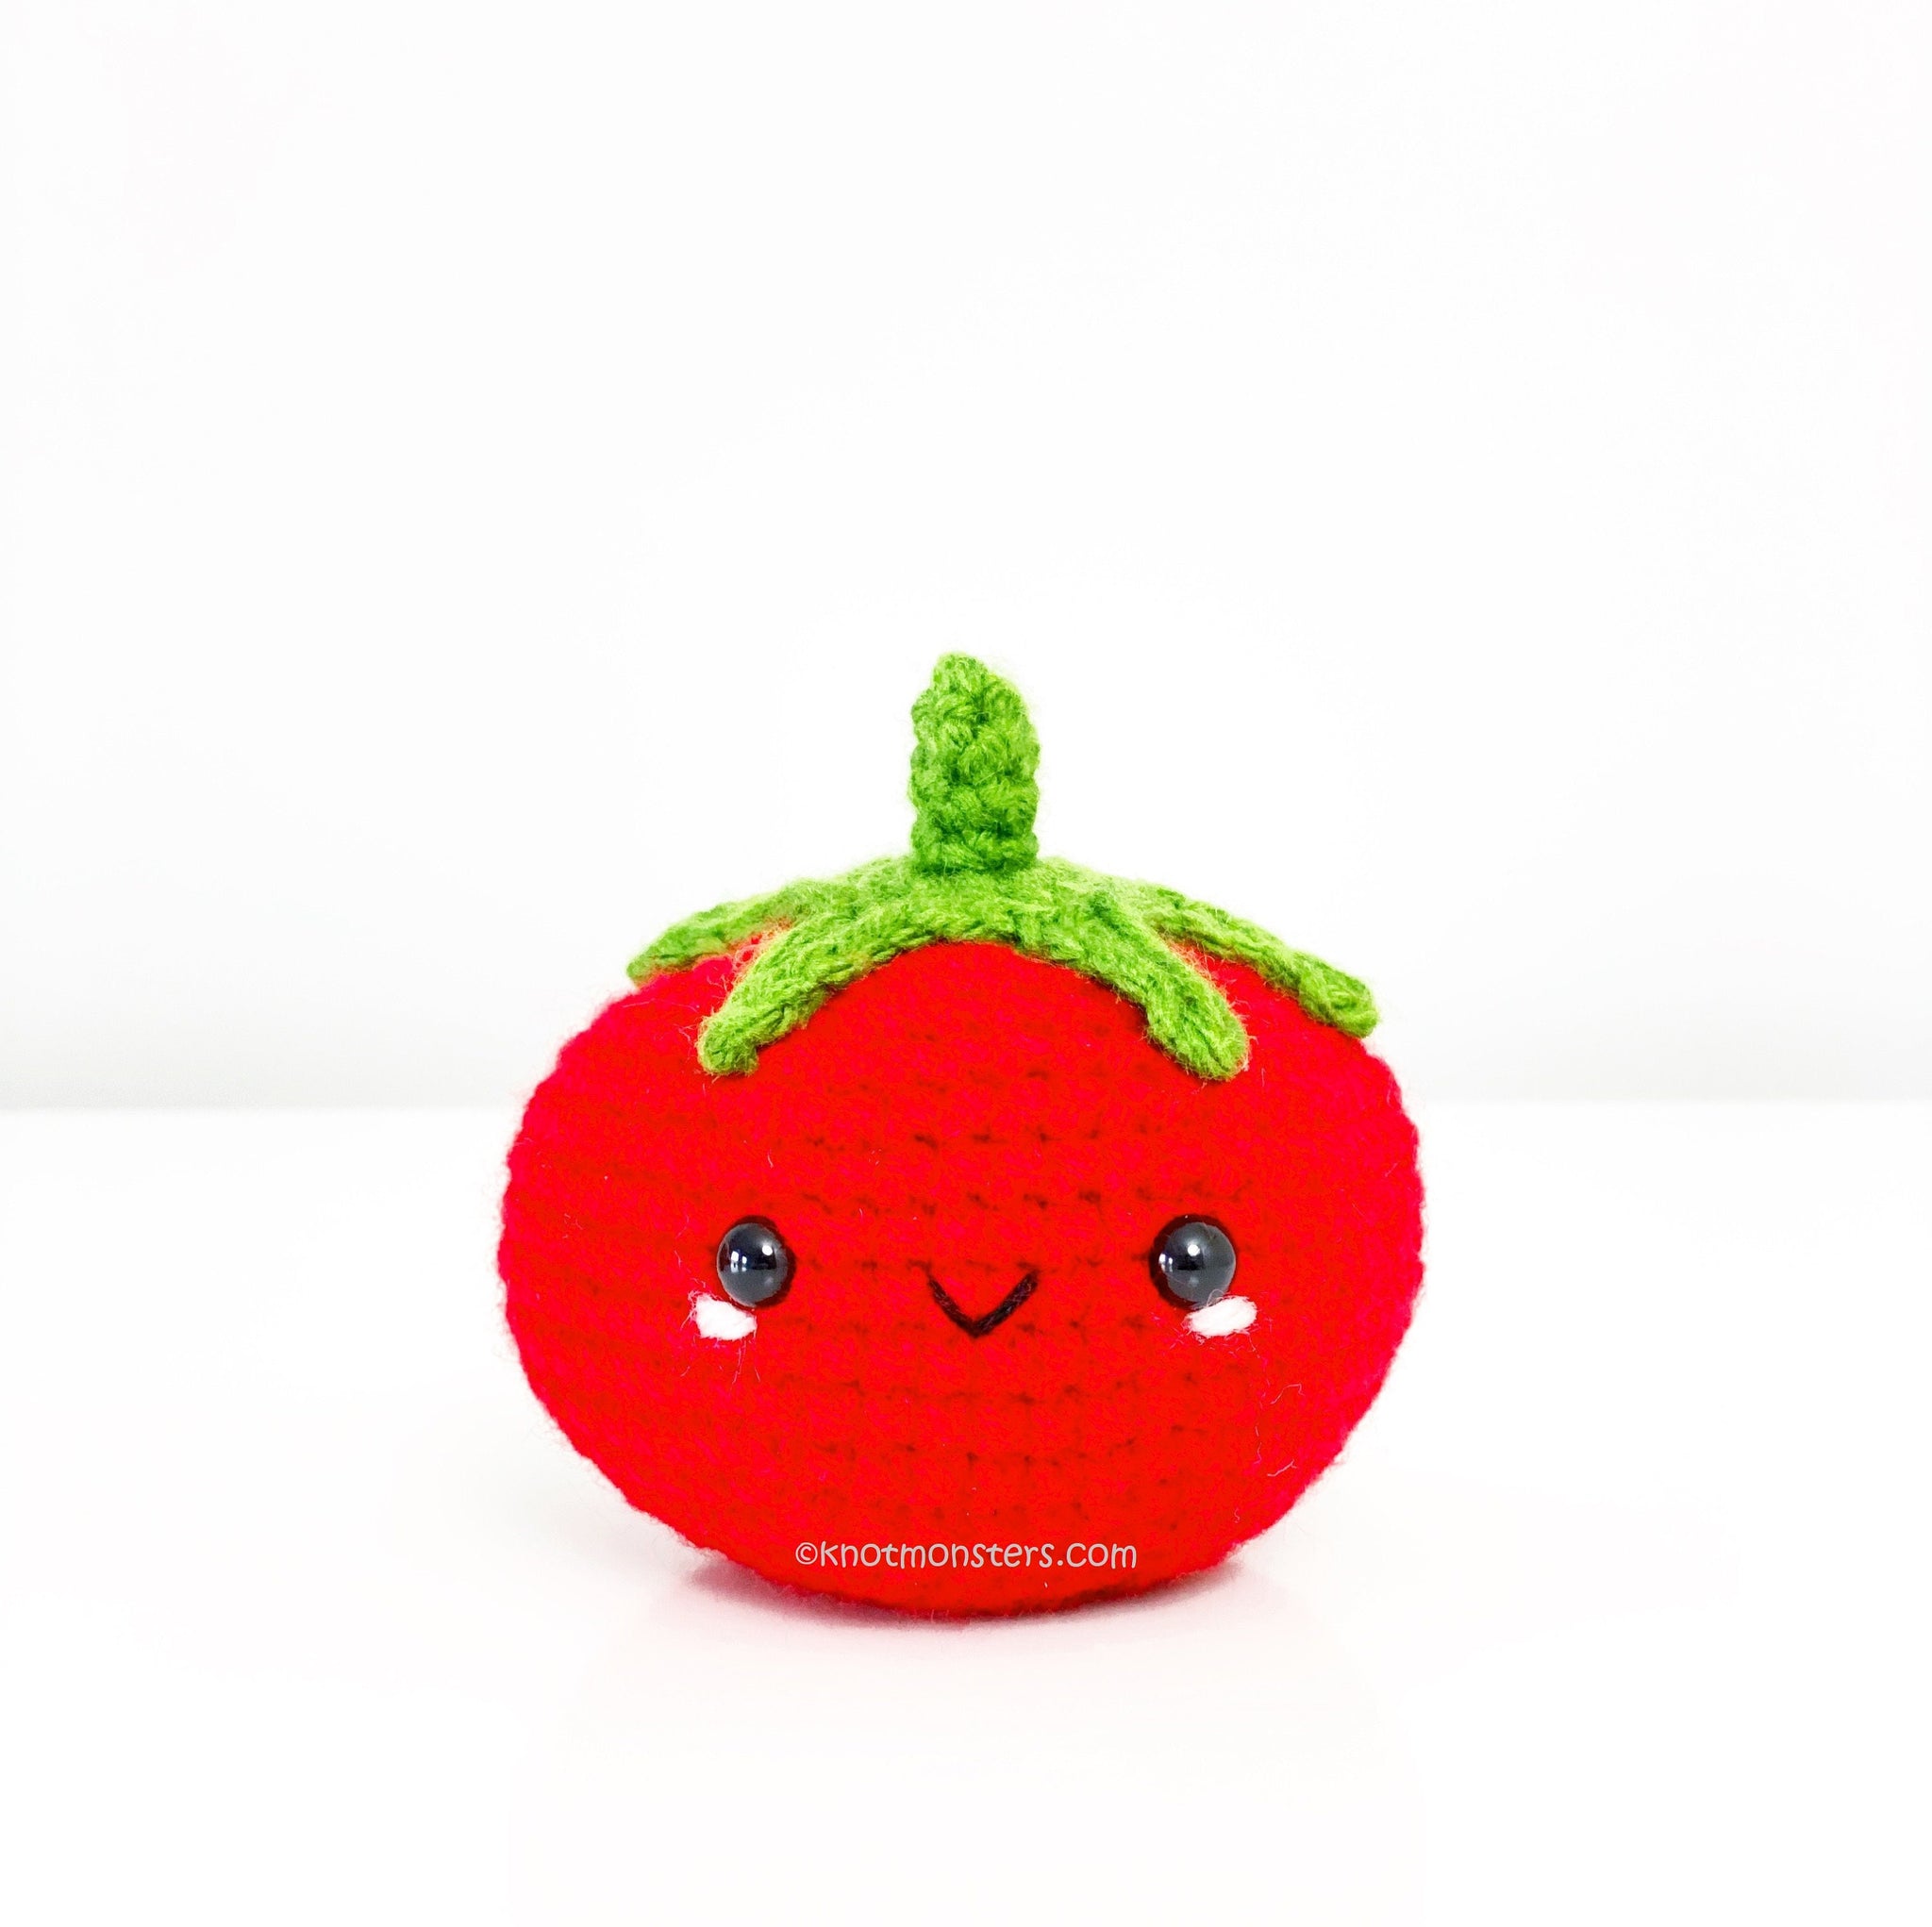 Tomato - Fruit (DIGITAL PATTERN)